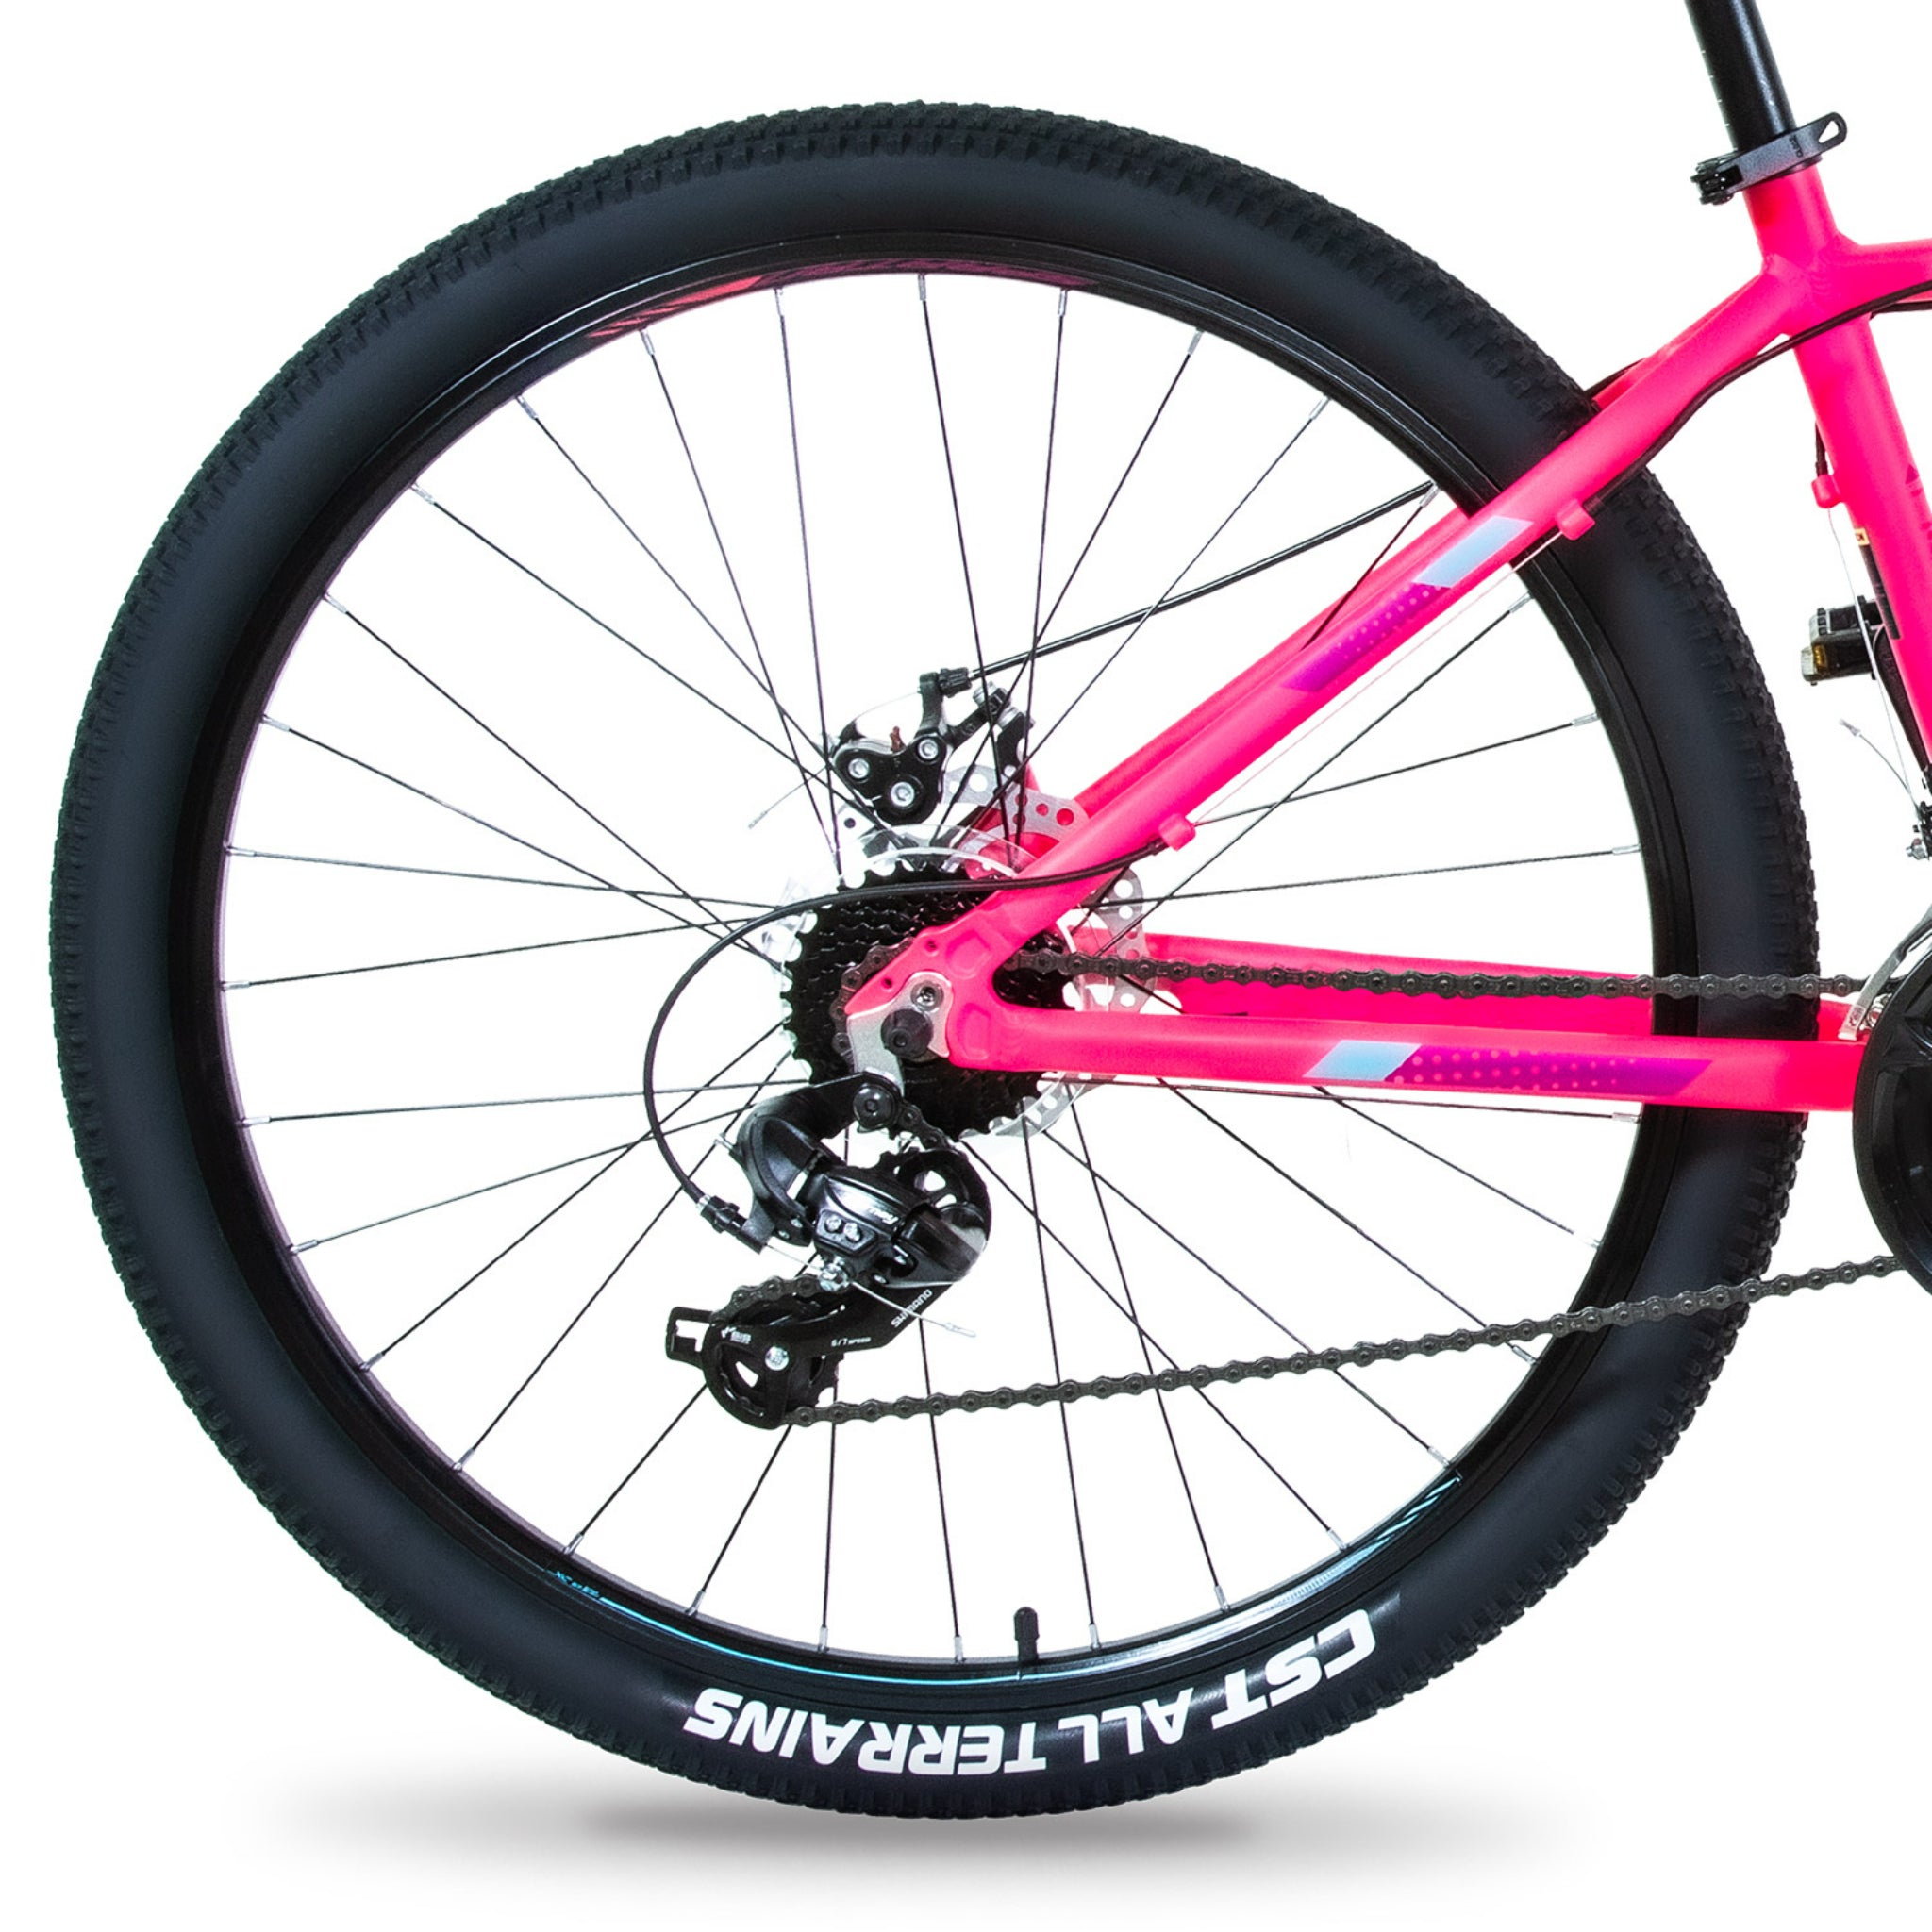 Spartan 27.5" Moraine MTB Alloy Bicycle Pink Default Title